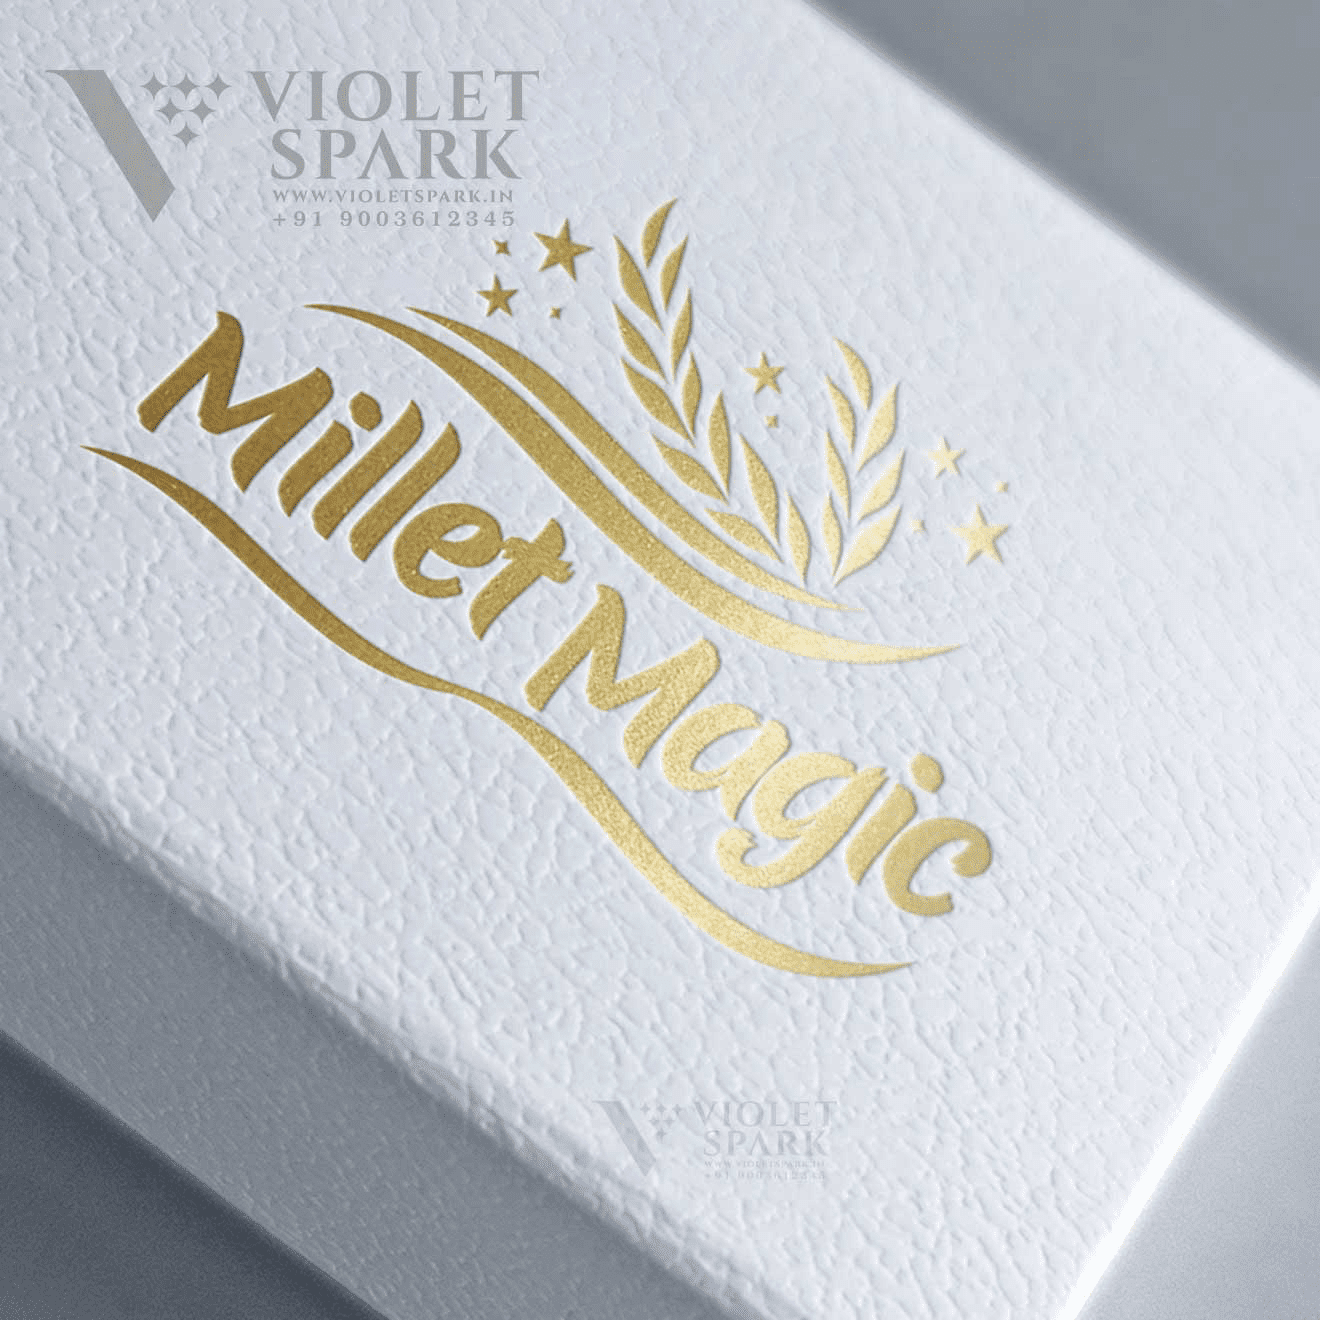 Millet Magic Gold Foil Printing Branding Packaging Design Digital Marketing in Bangalore by Violet Spark